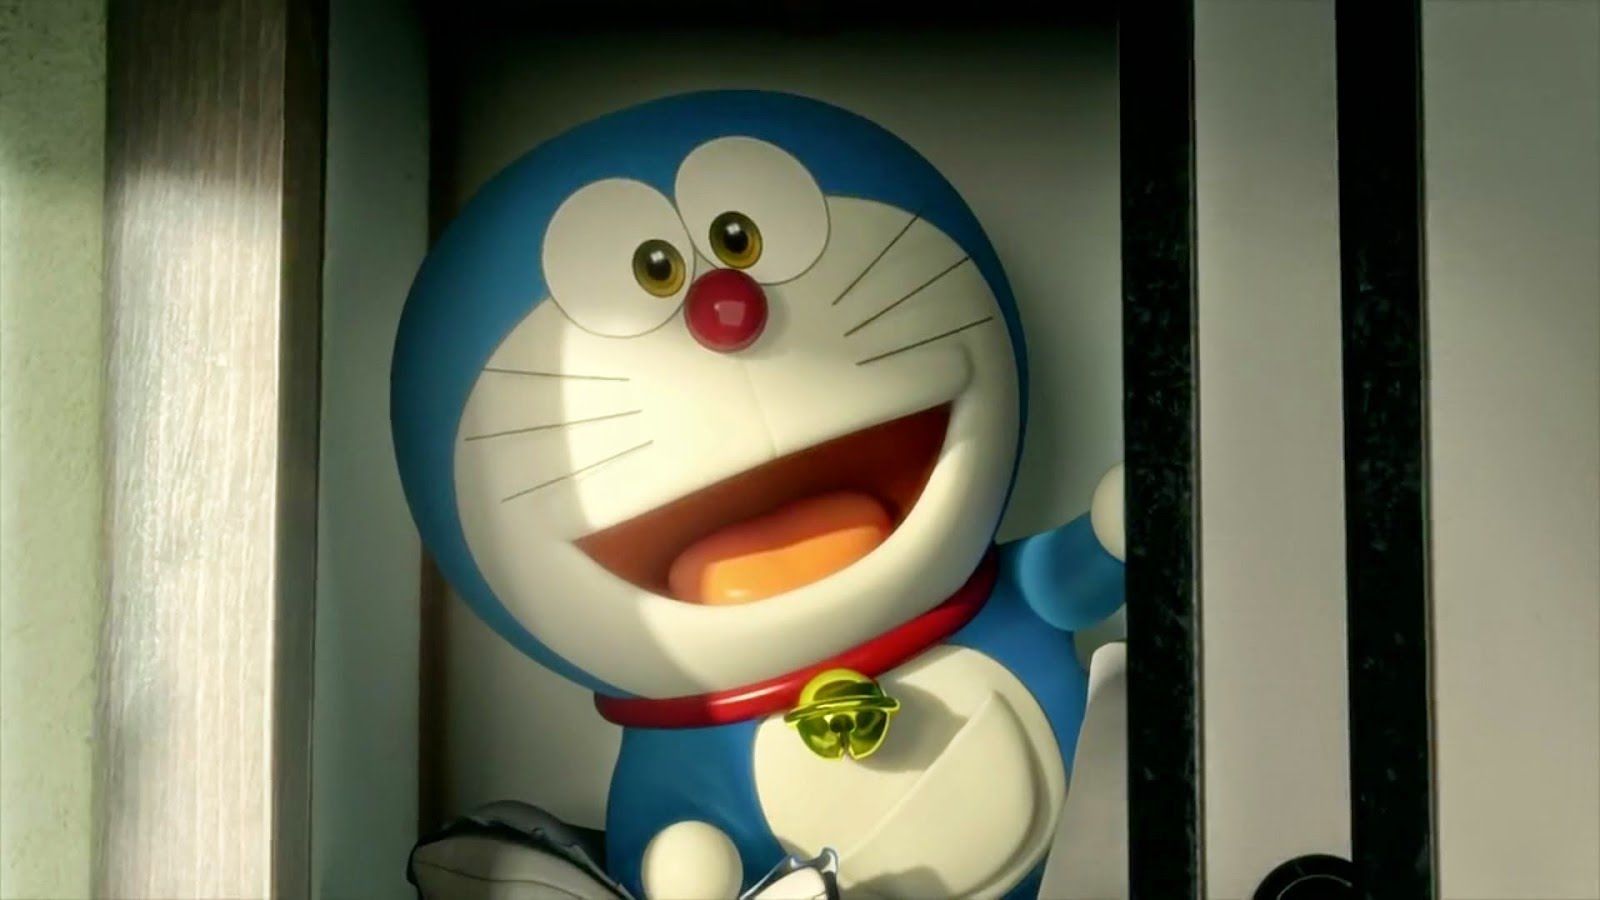 Stand By Me Doreamon Lyrics Motohiro Hata Himawari No Yakusoku English Translation. Doraemon Wallpaper, Doraemon, Doraemon Cartoon